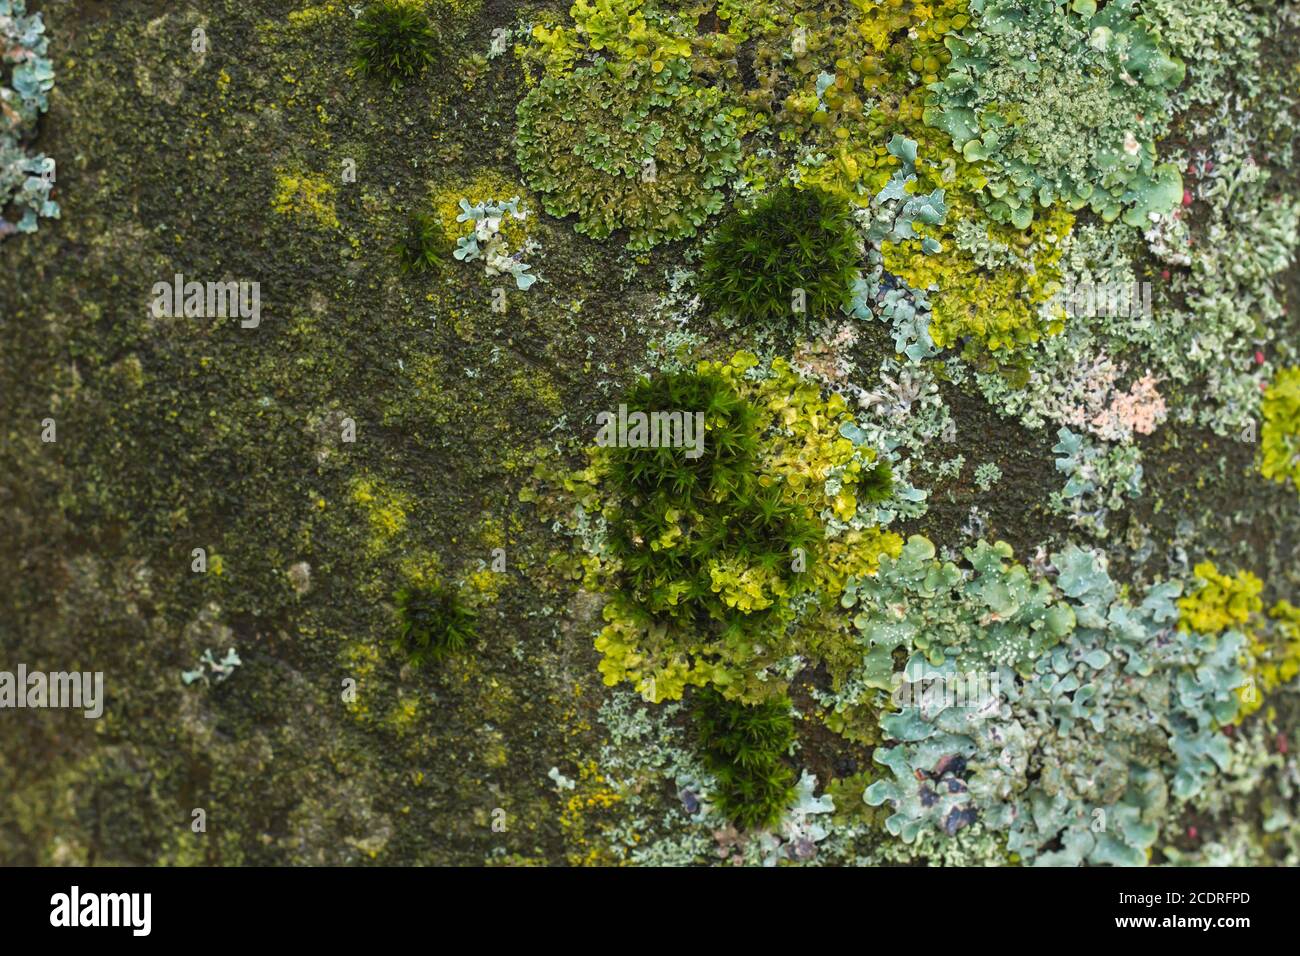 Lichen on a tree trunk Stock Photo